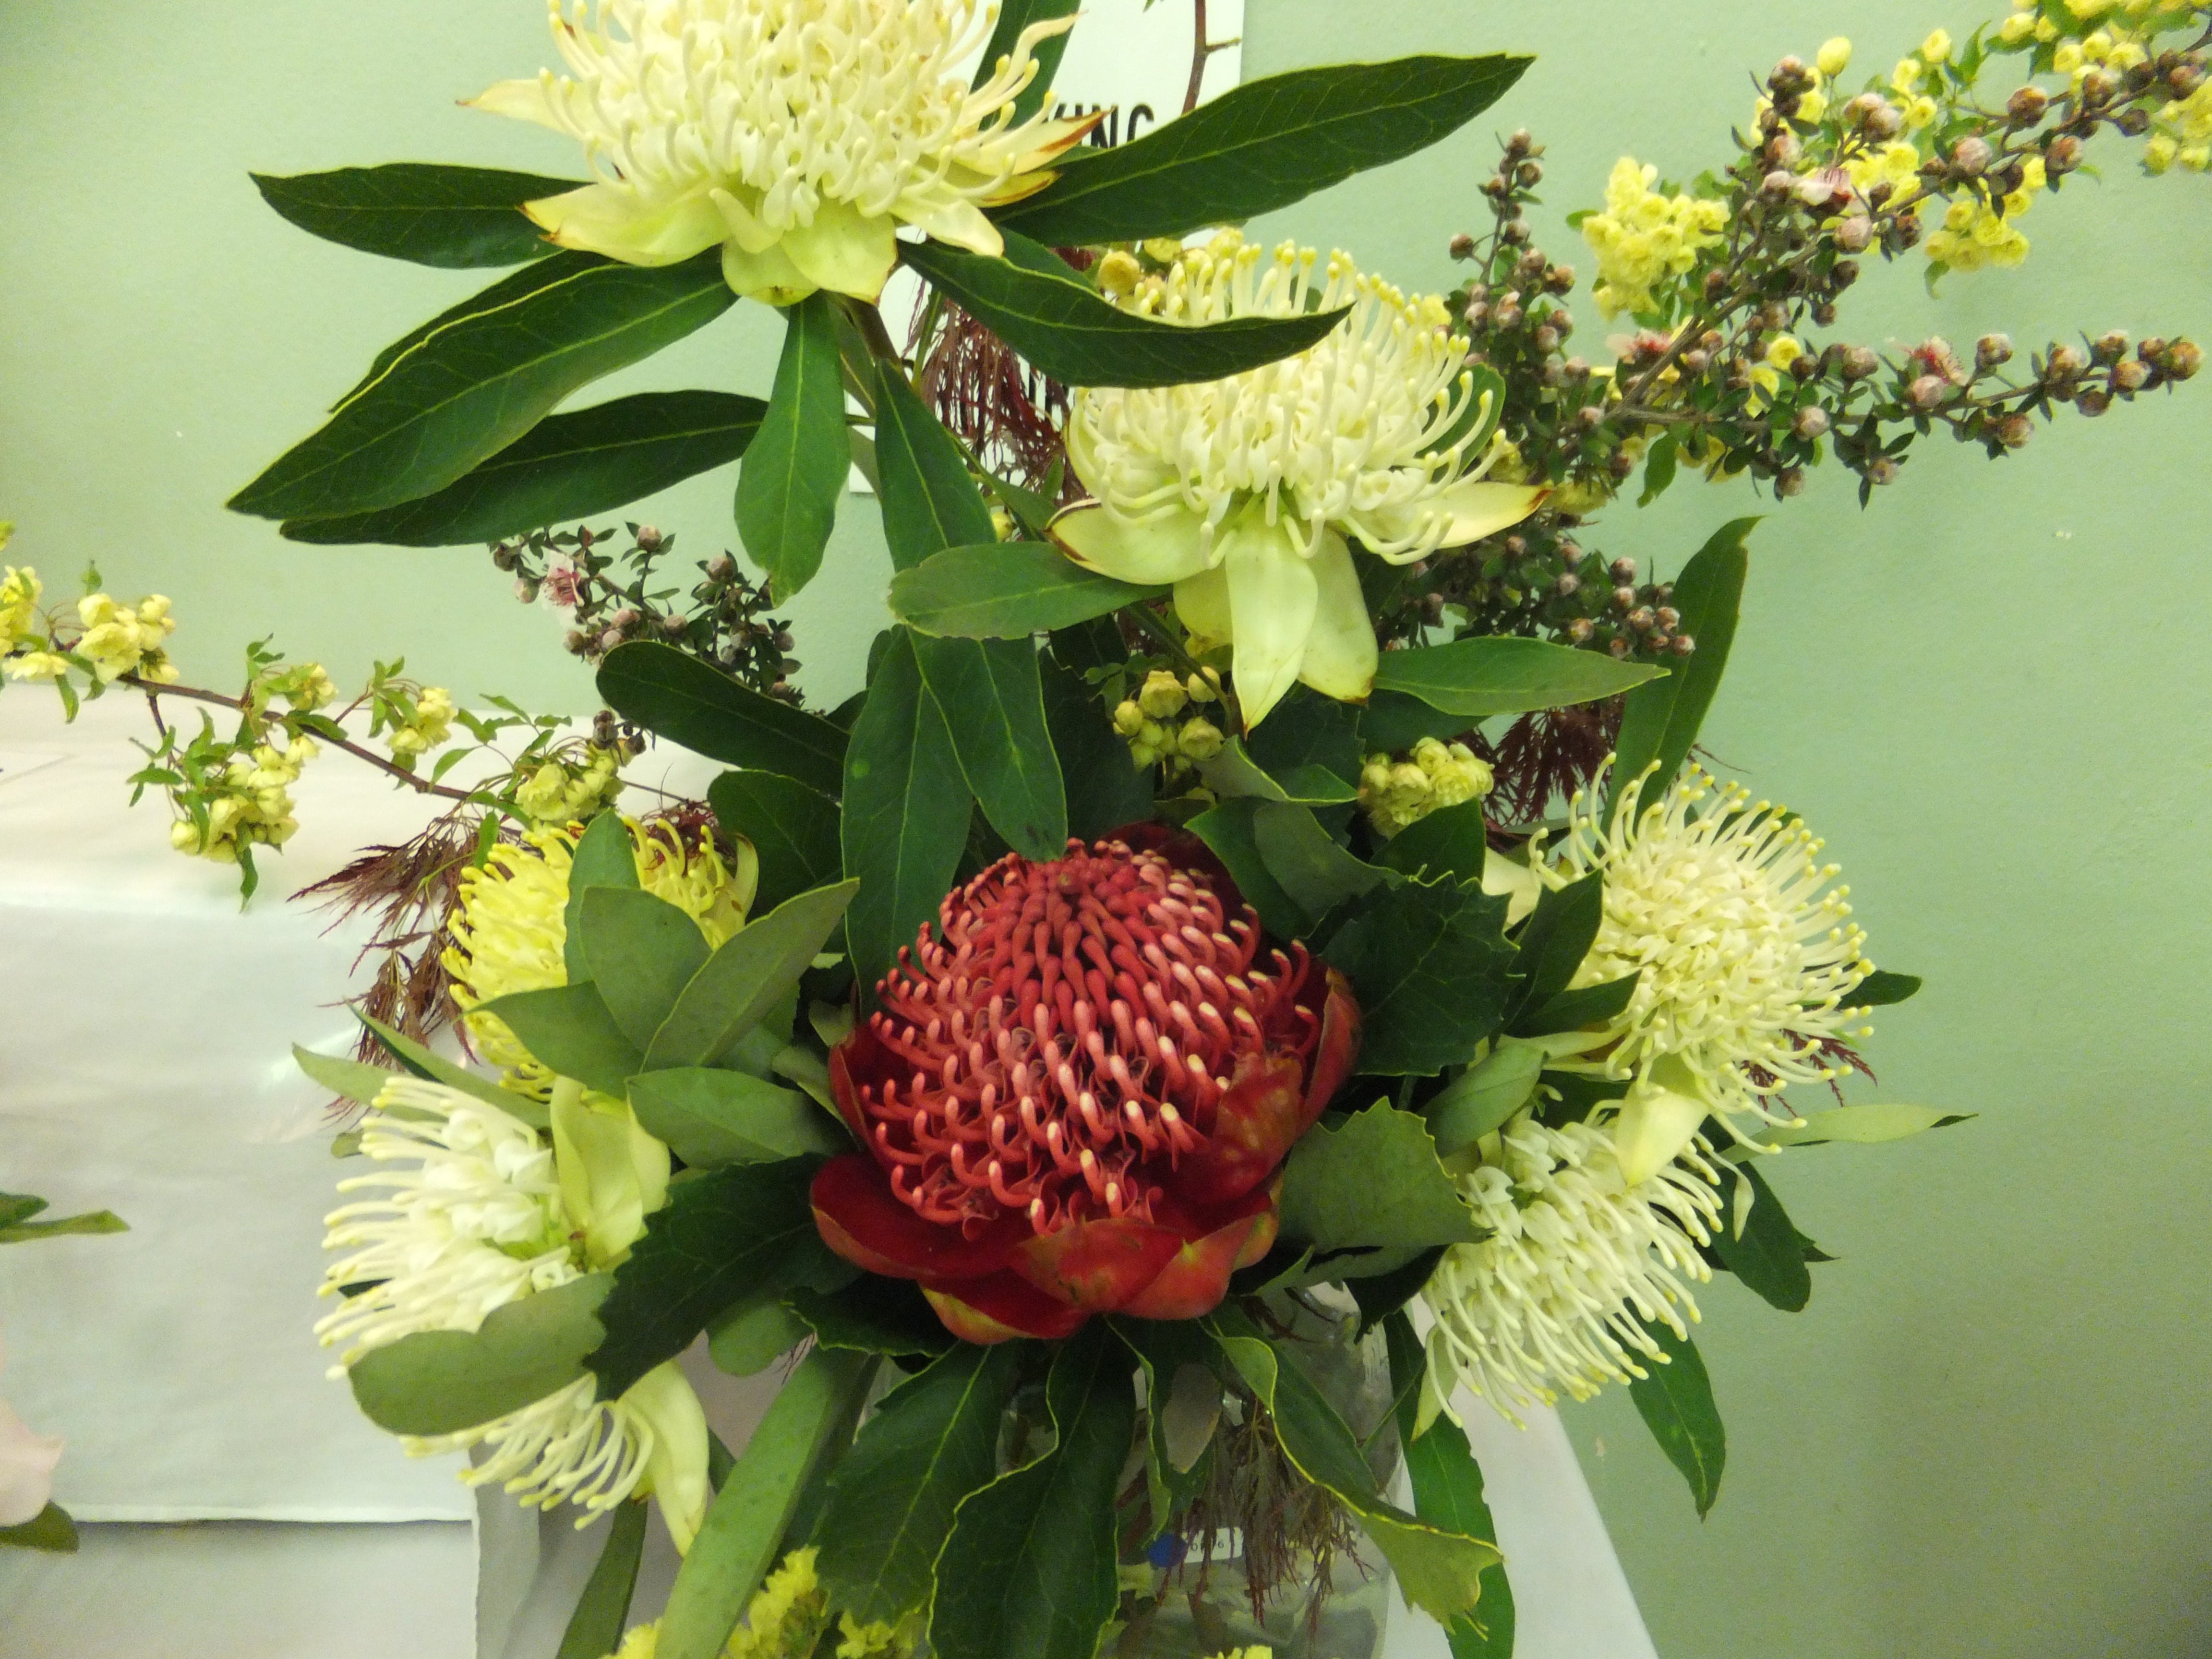 Blackheath Flower and Craft Show - Townsville Tourism